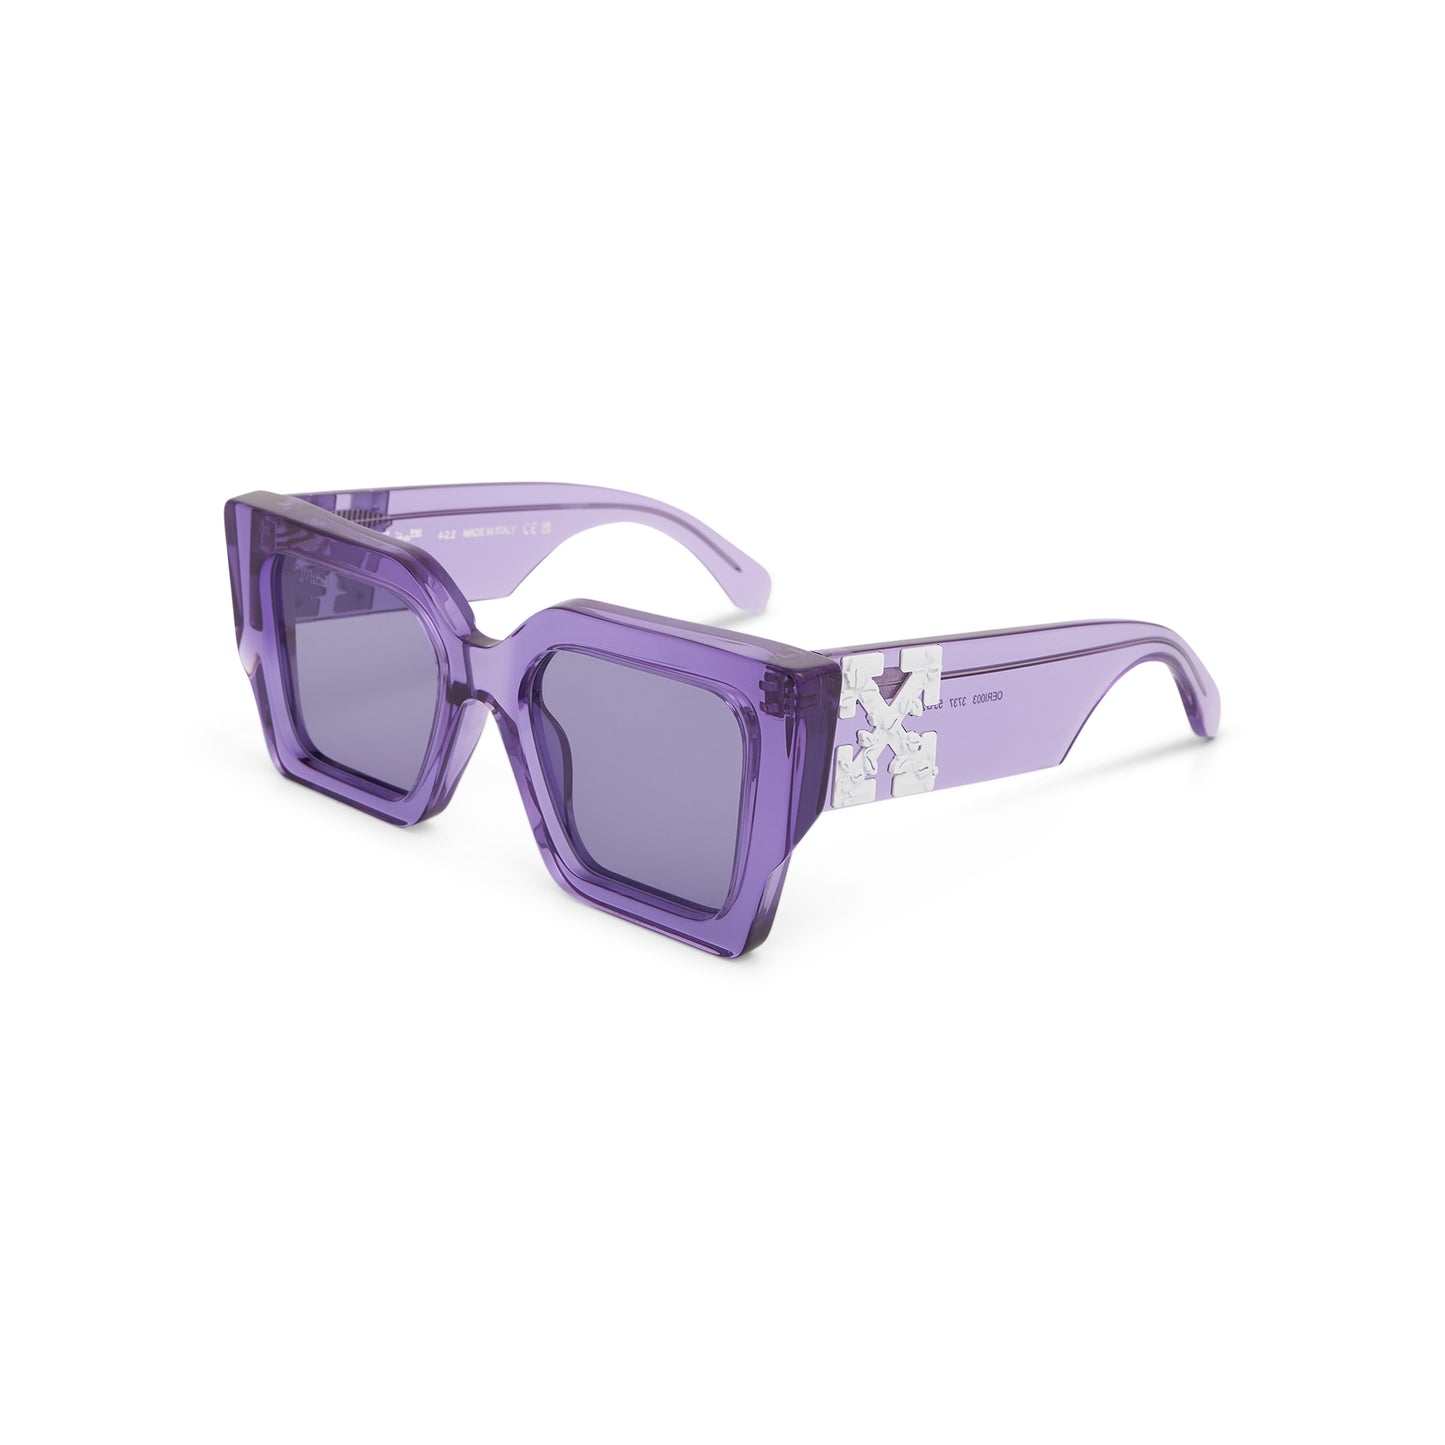 Catalina Sunglasses in Crystal/Purple